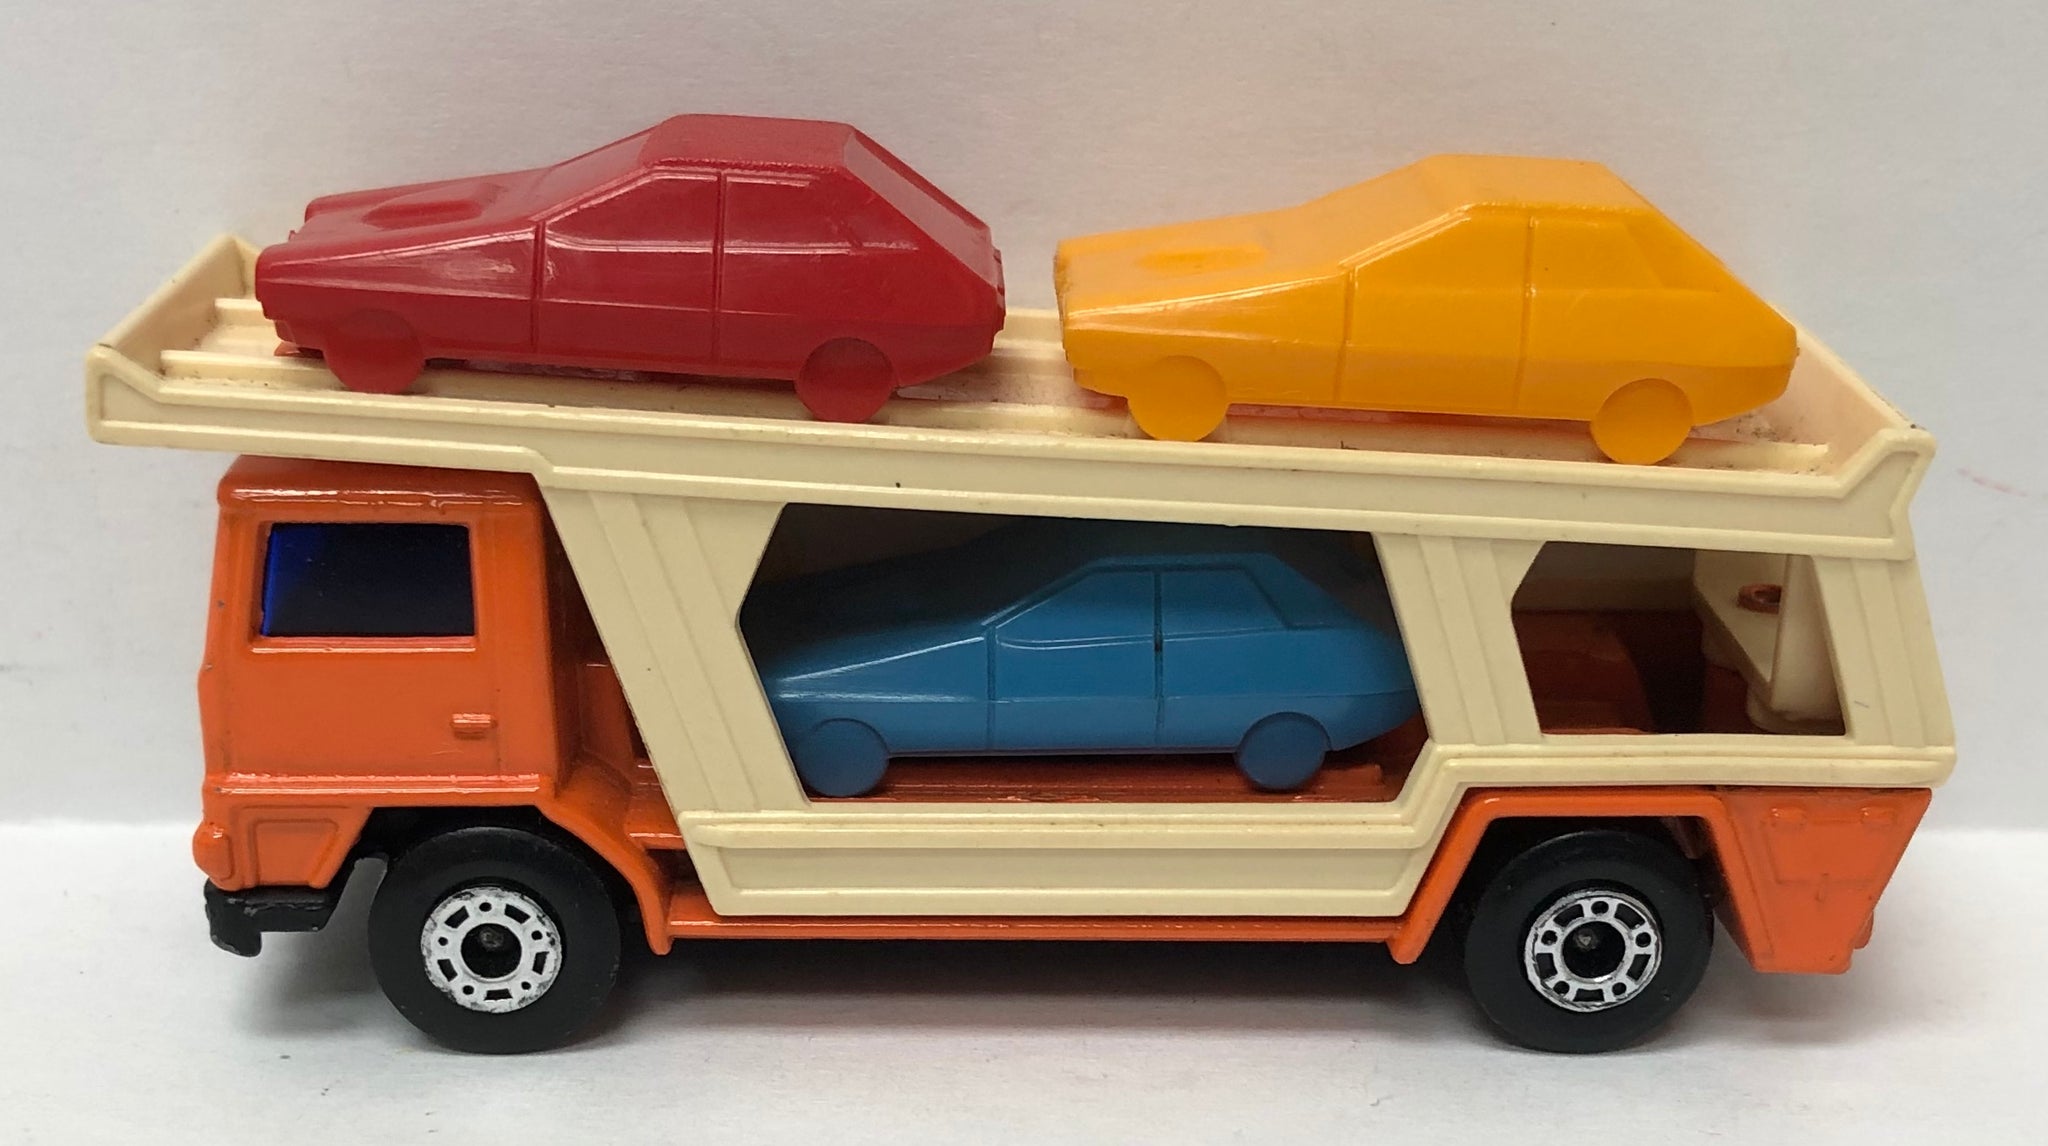 matchbox car transporter